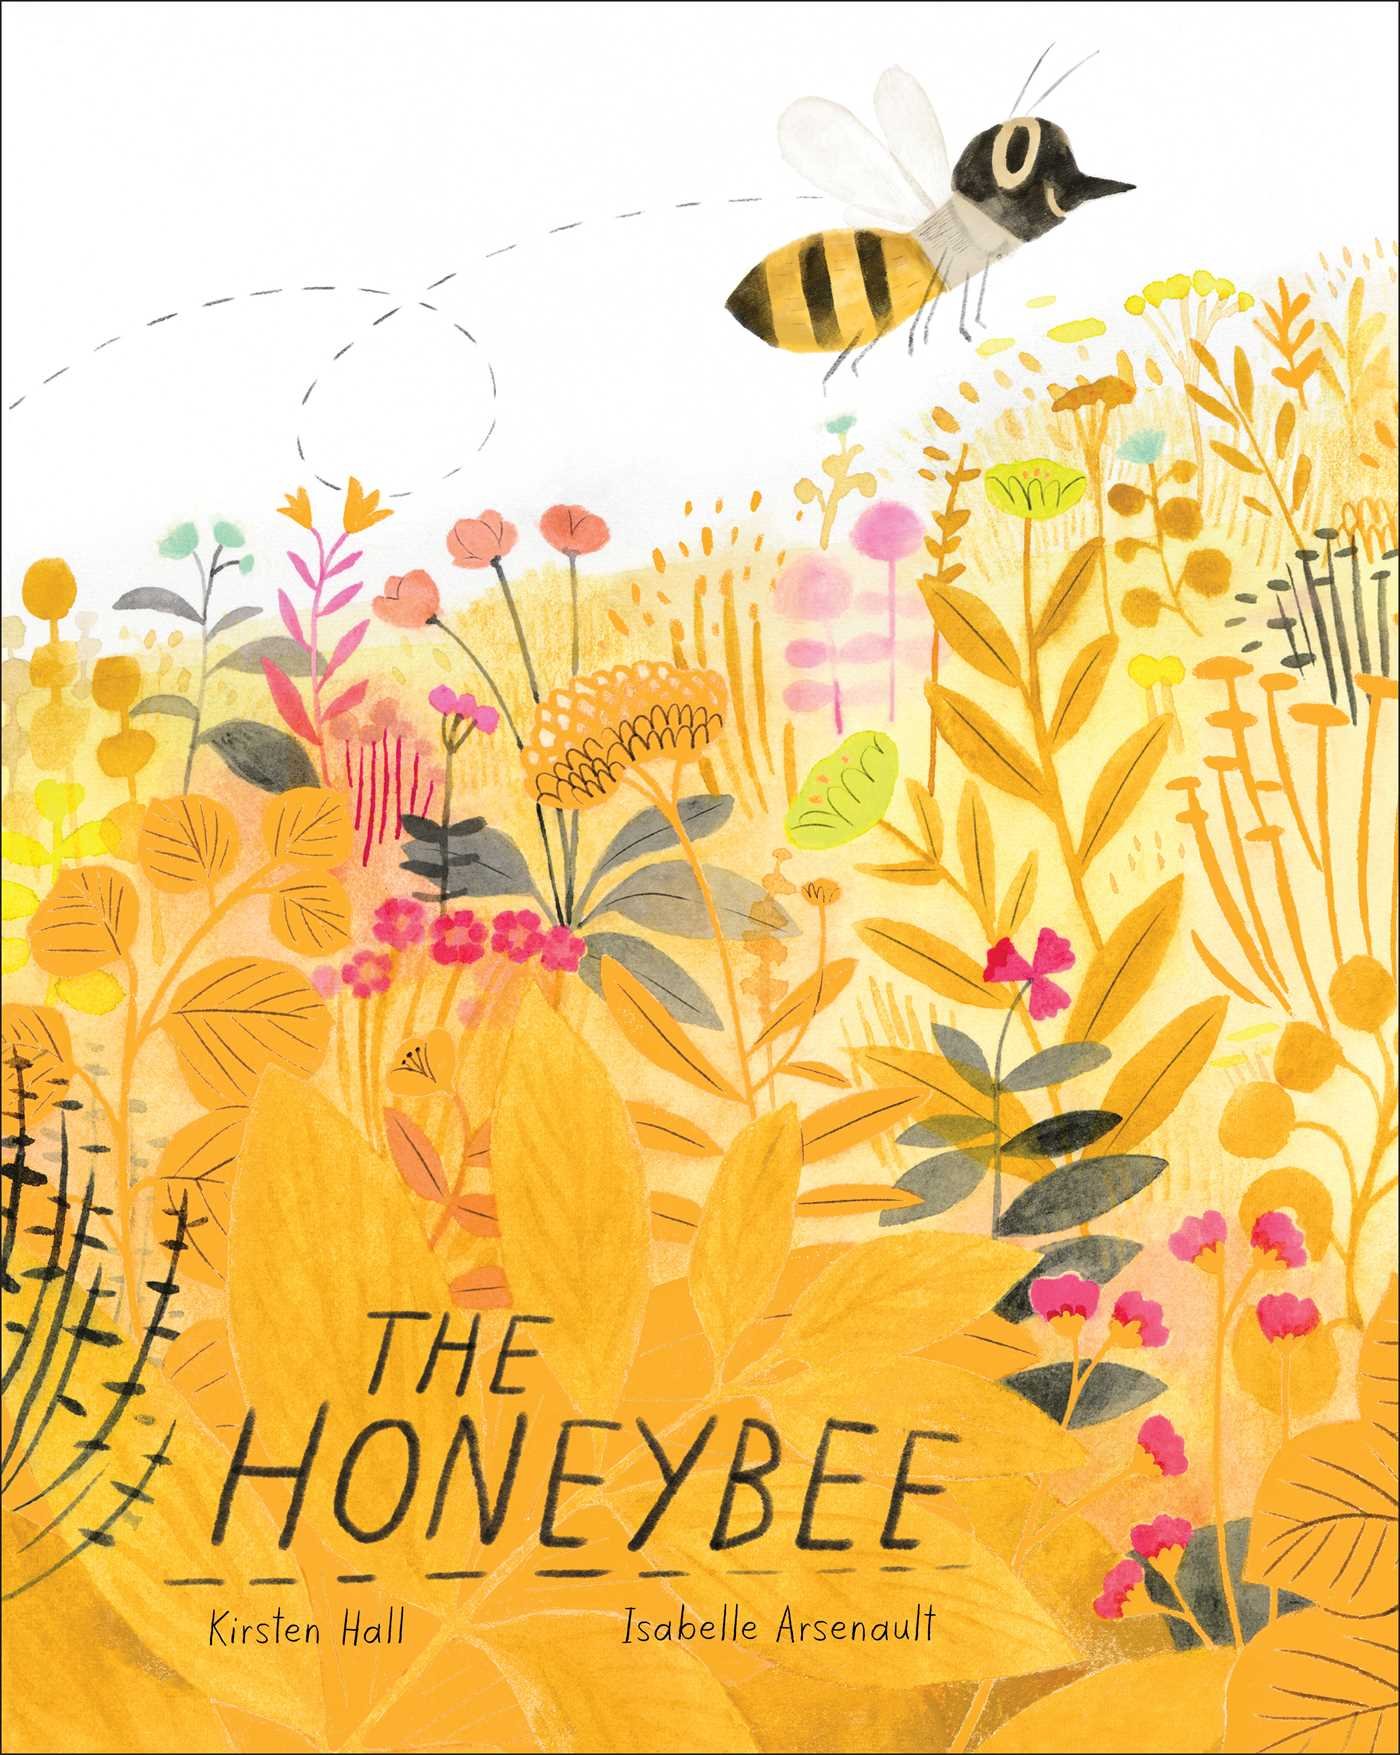 The Honeybee book by Kirsten Hall